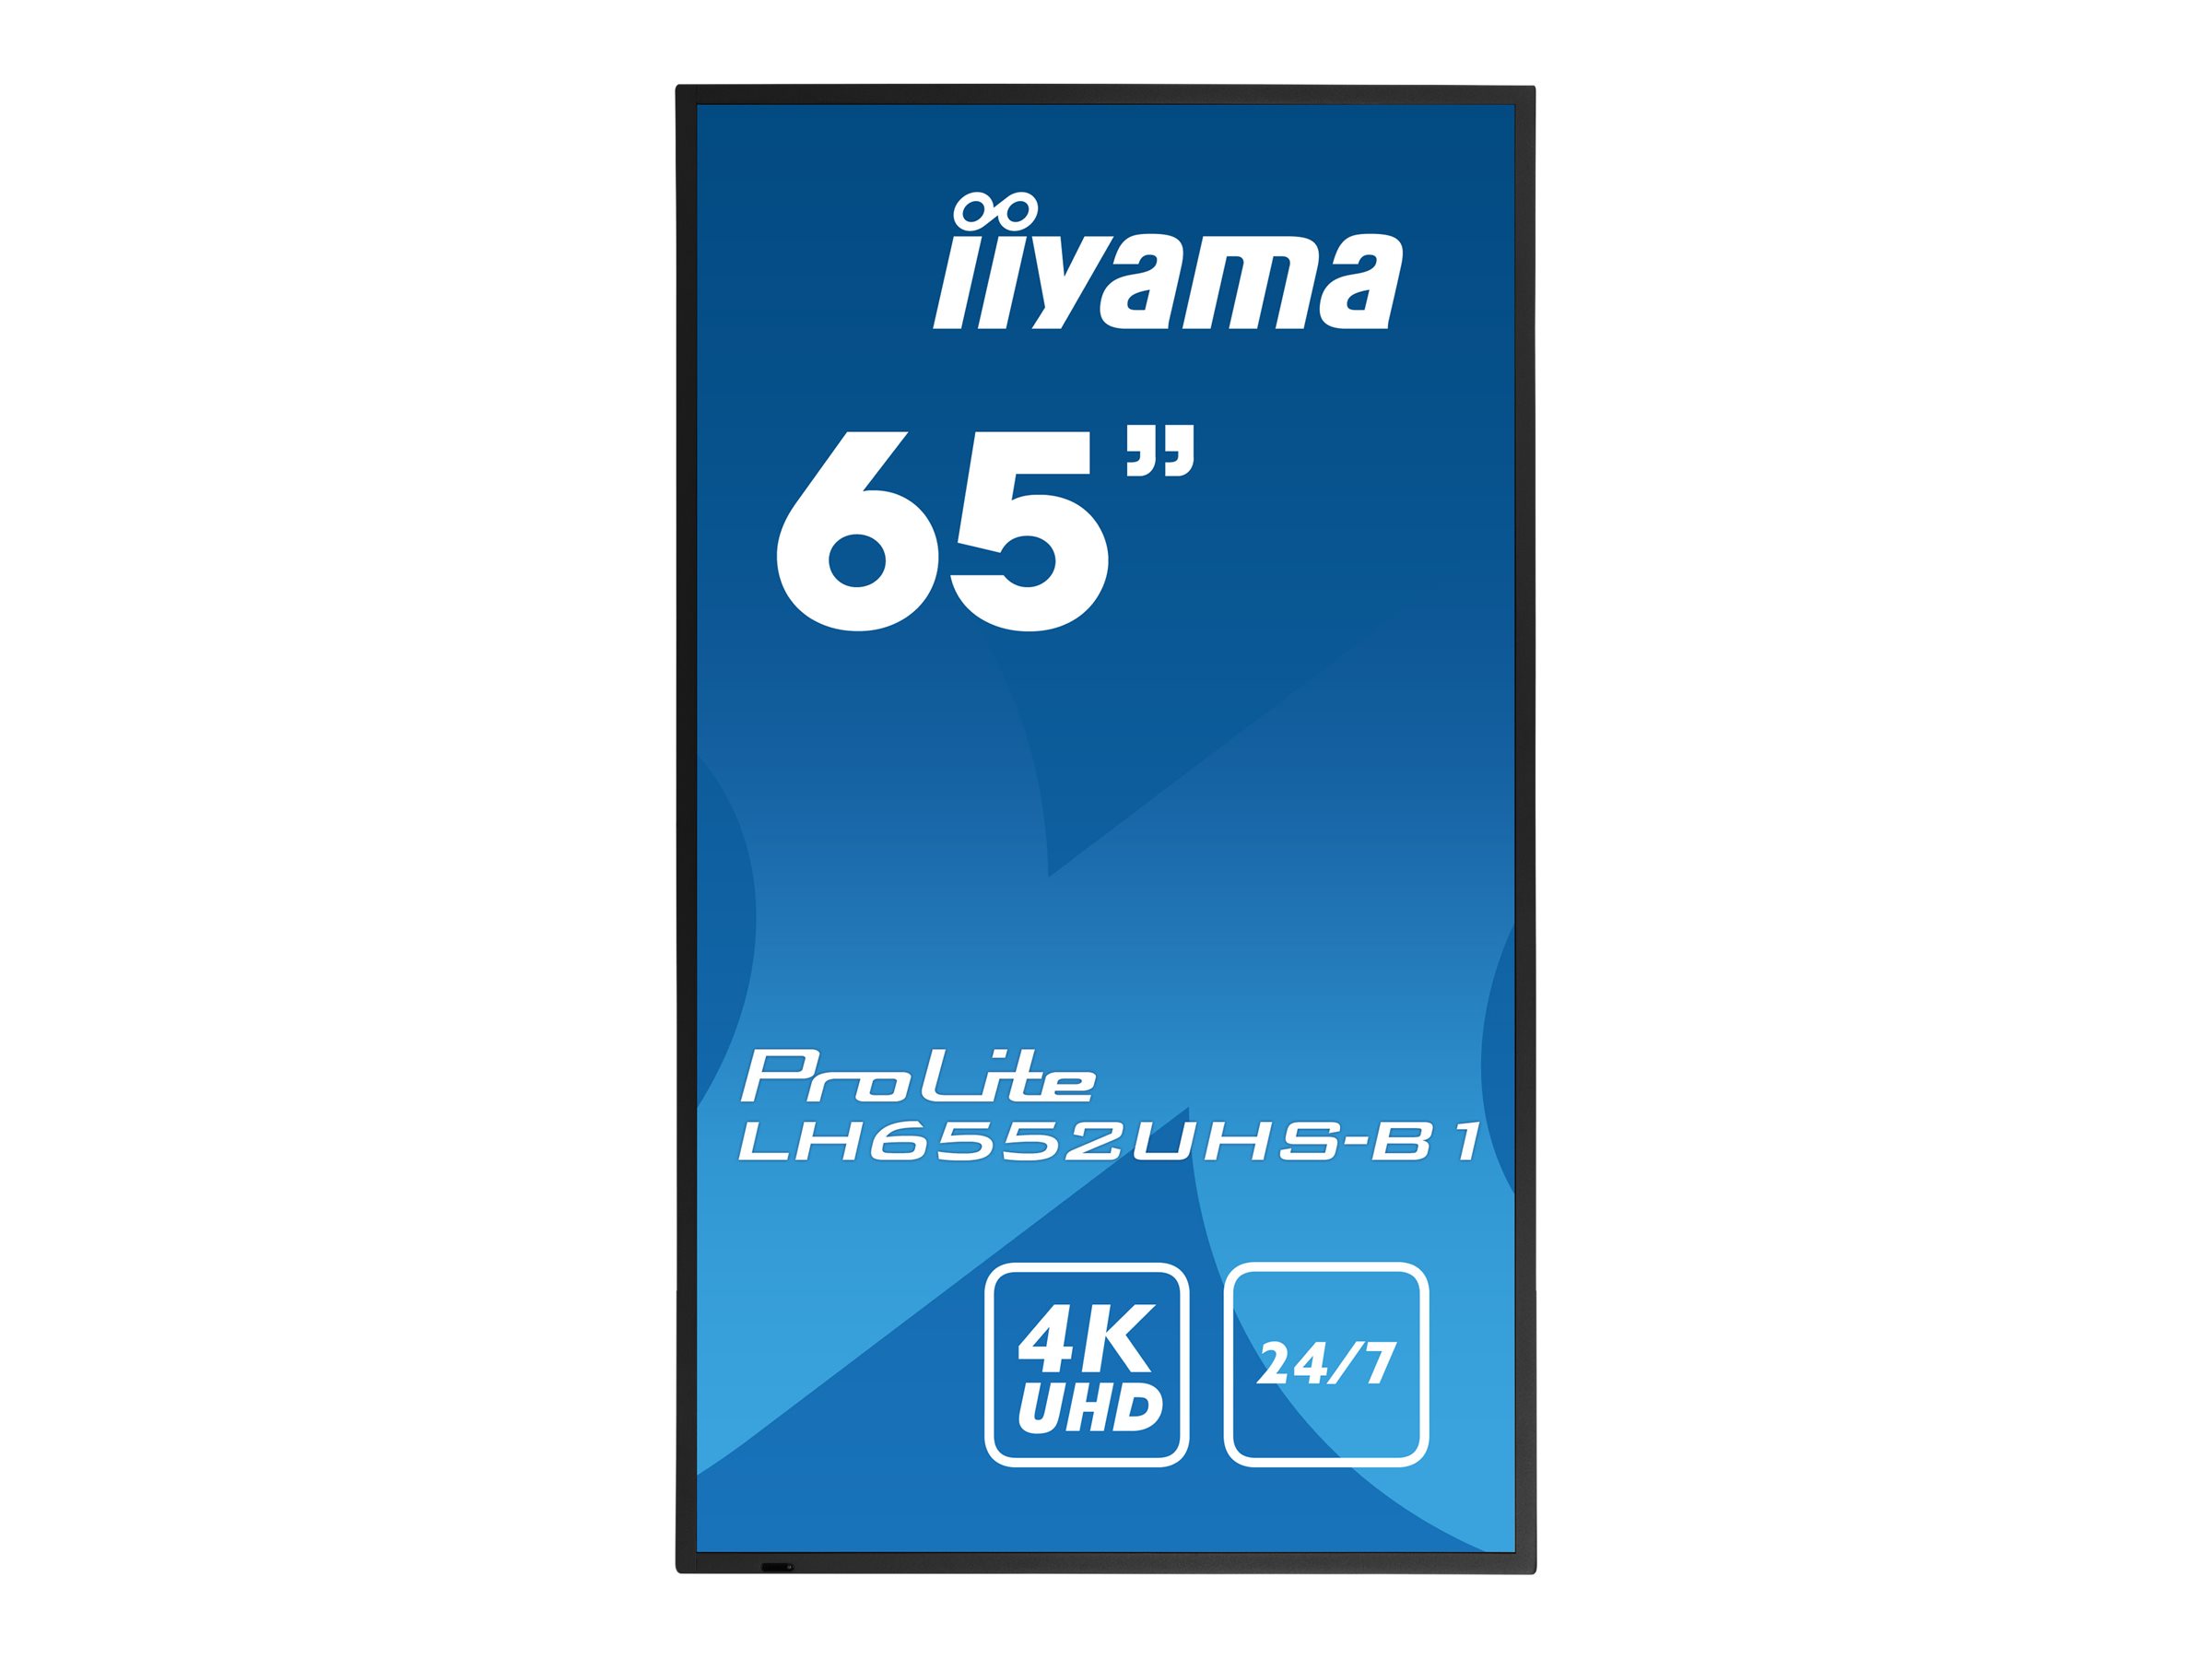 iiyama ProLite LH6552UHS-B1, 165cm (65 Zoll), schwarz